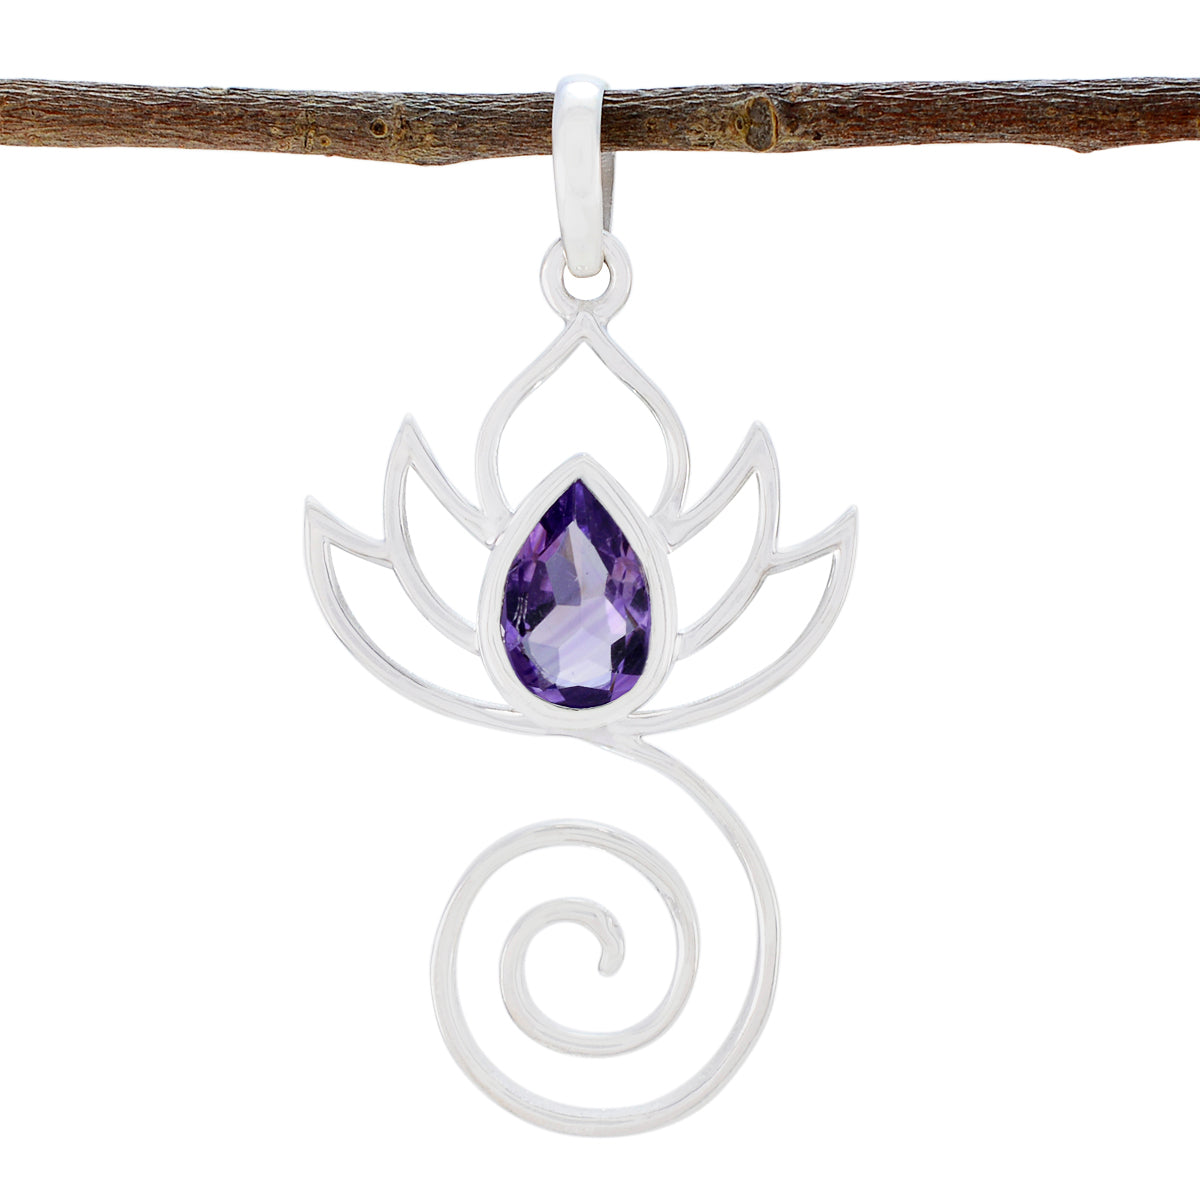 Riyo Lovely Gemstone Pear Faceted Purple Amethyst Sterling Silver Pendant Gift For Women